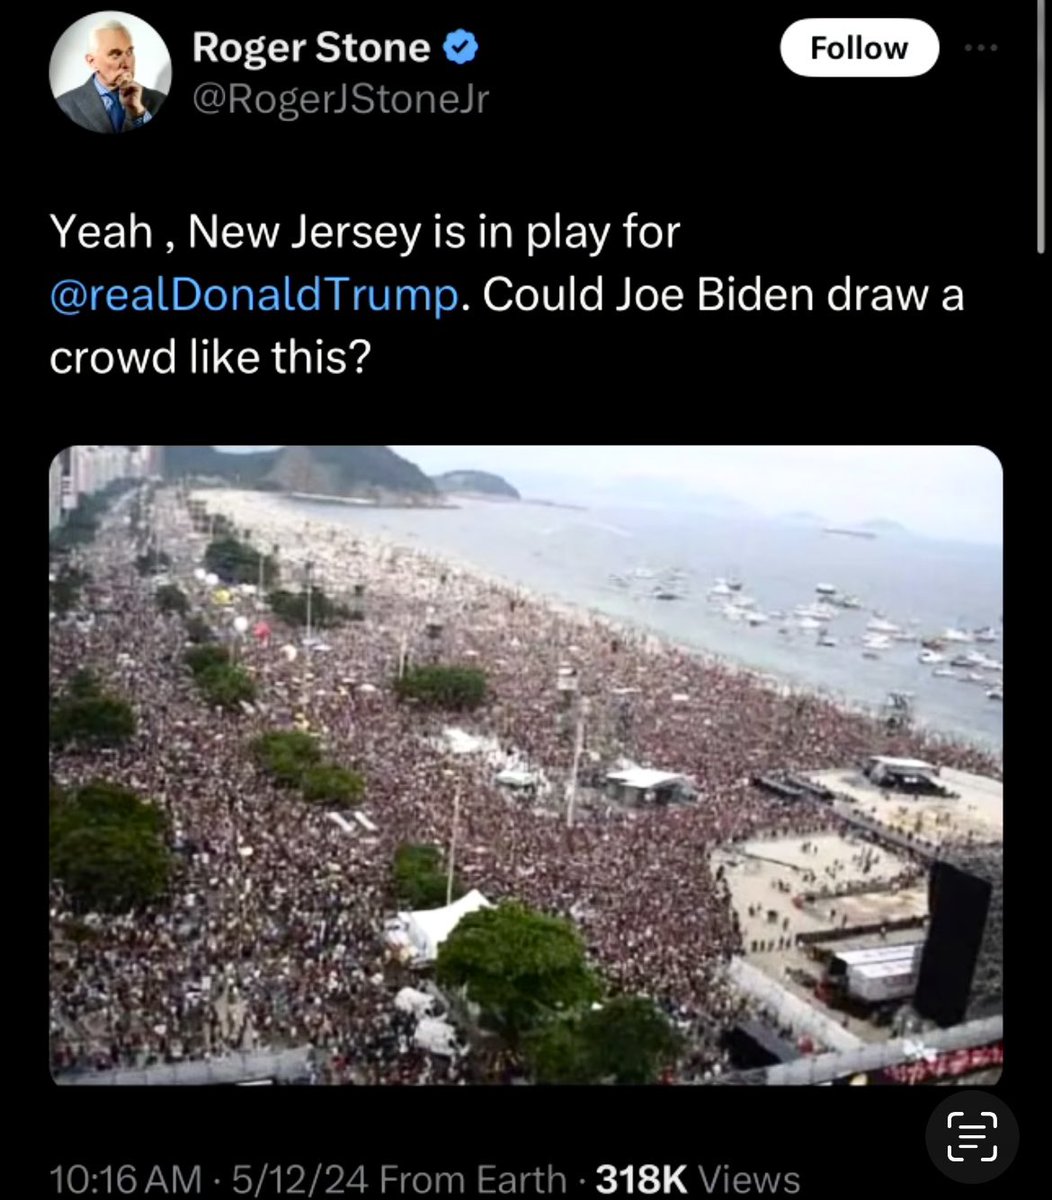 Trump had a rally in Brazil?